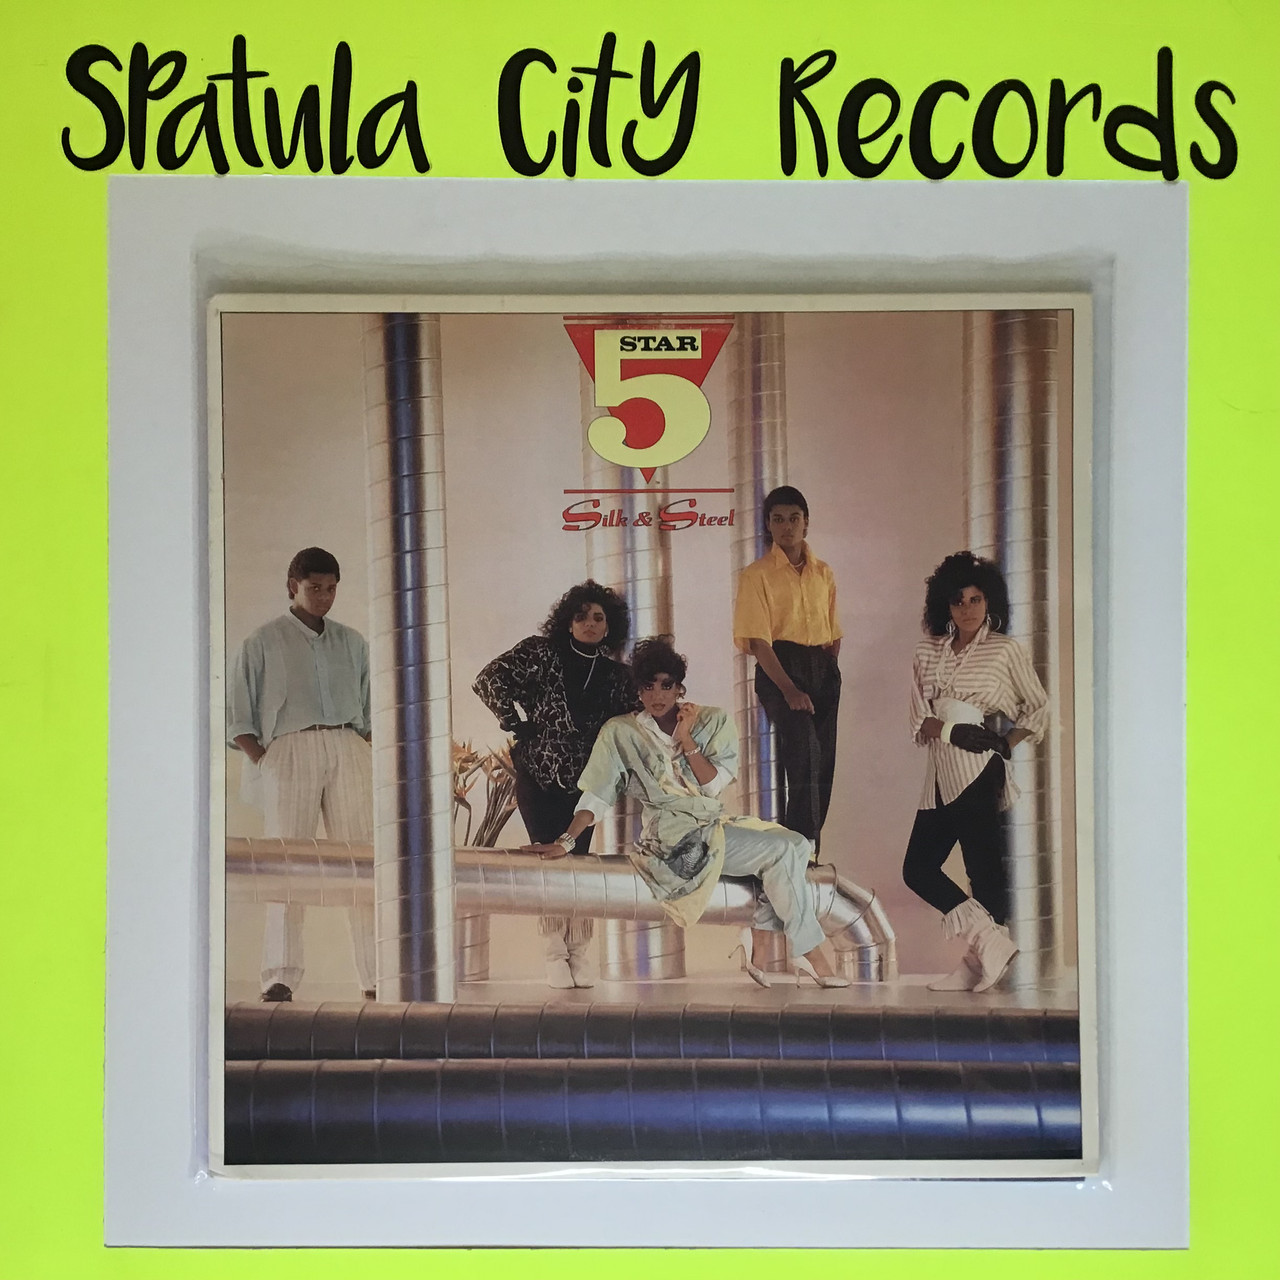 5 Star - Silk and Steel - vinyl record album LP